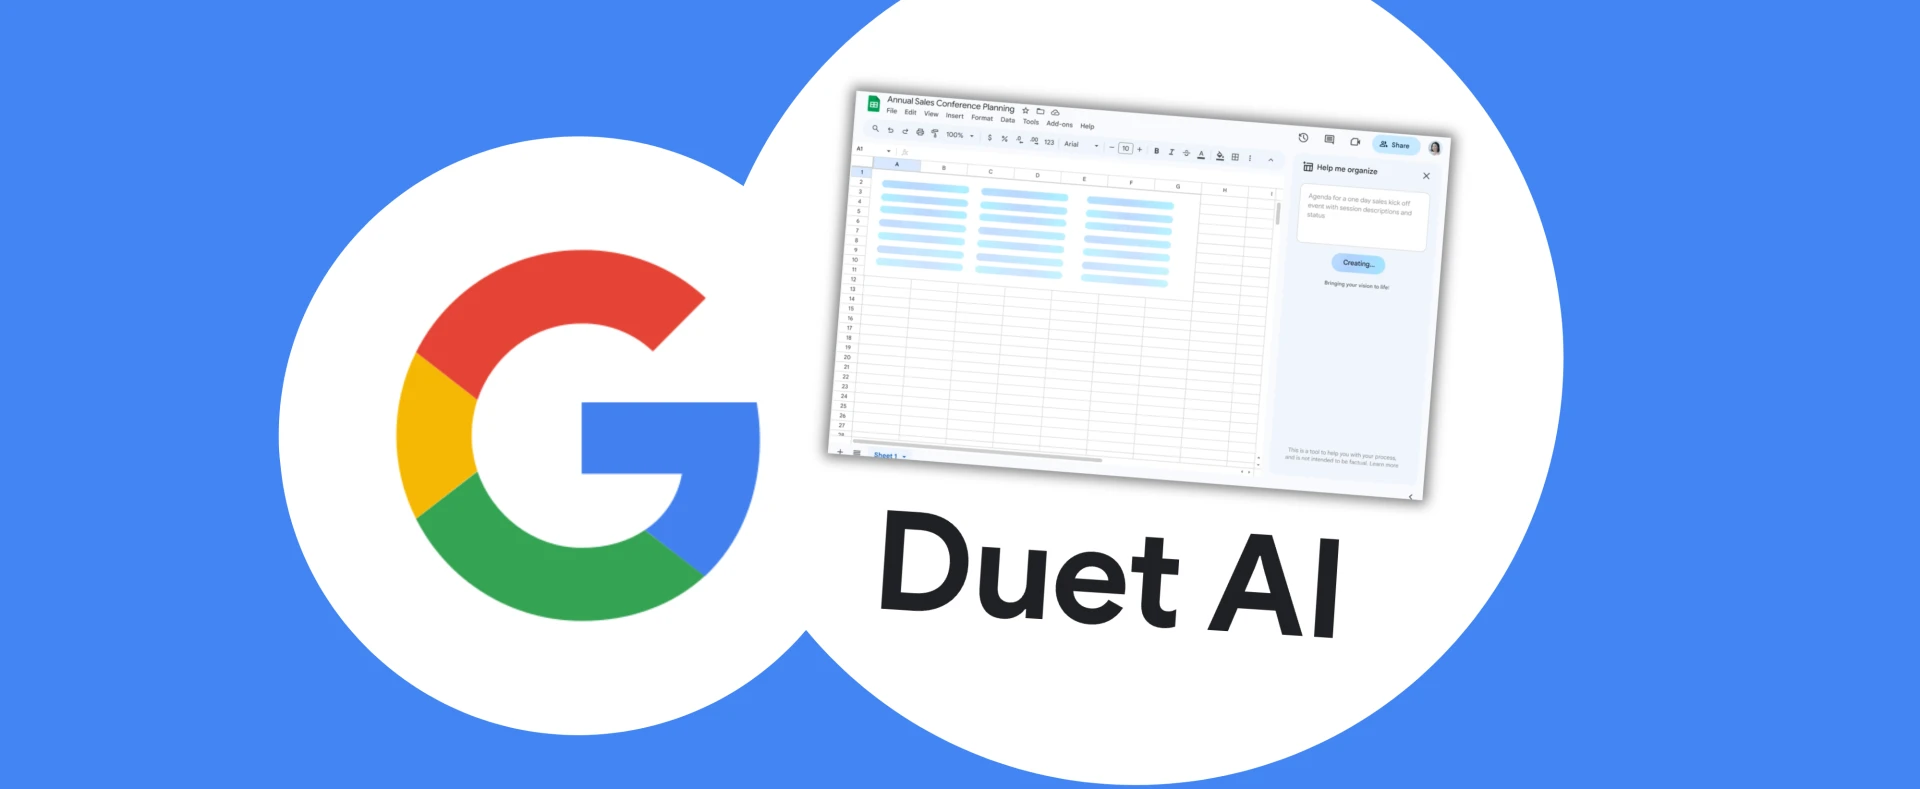 Google Workspace adds Duet Ai